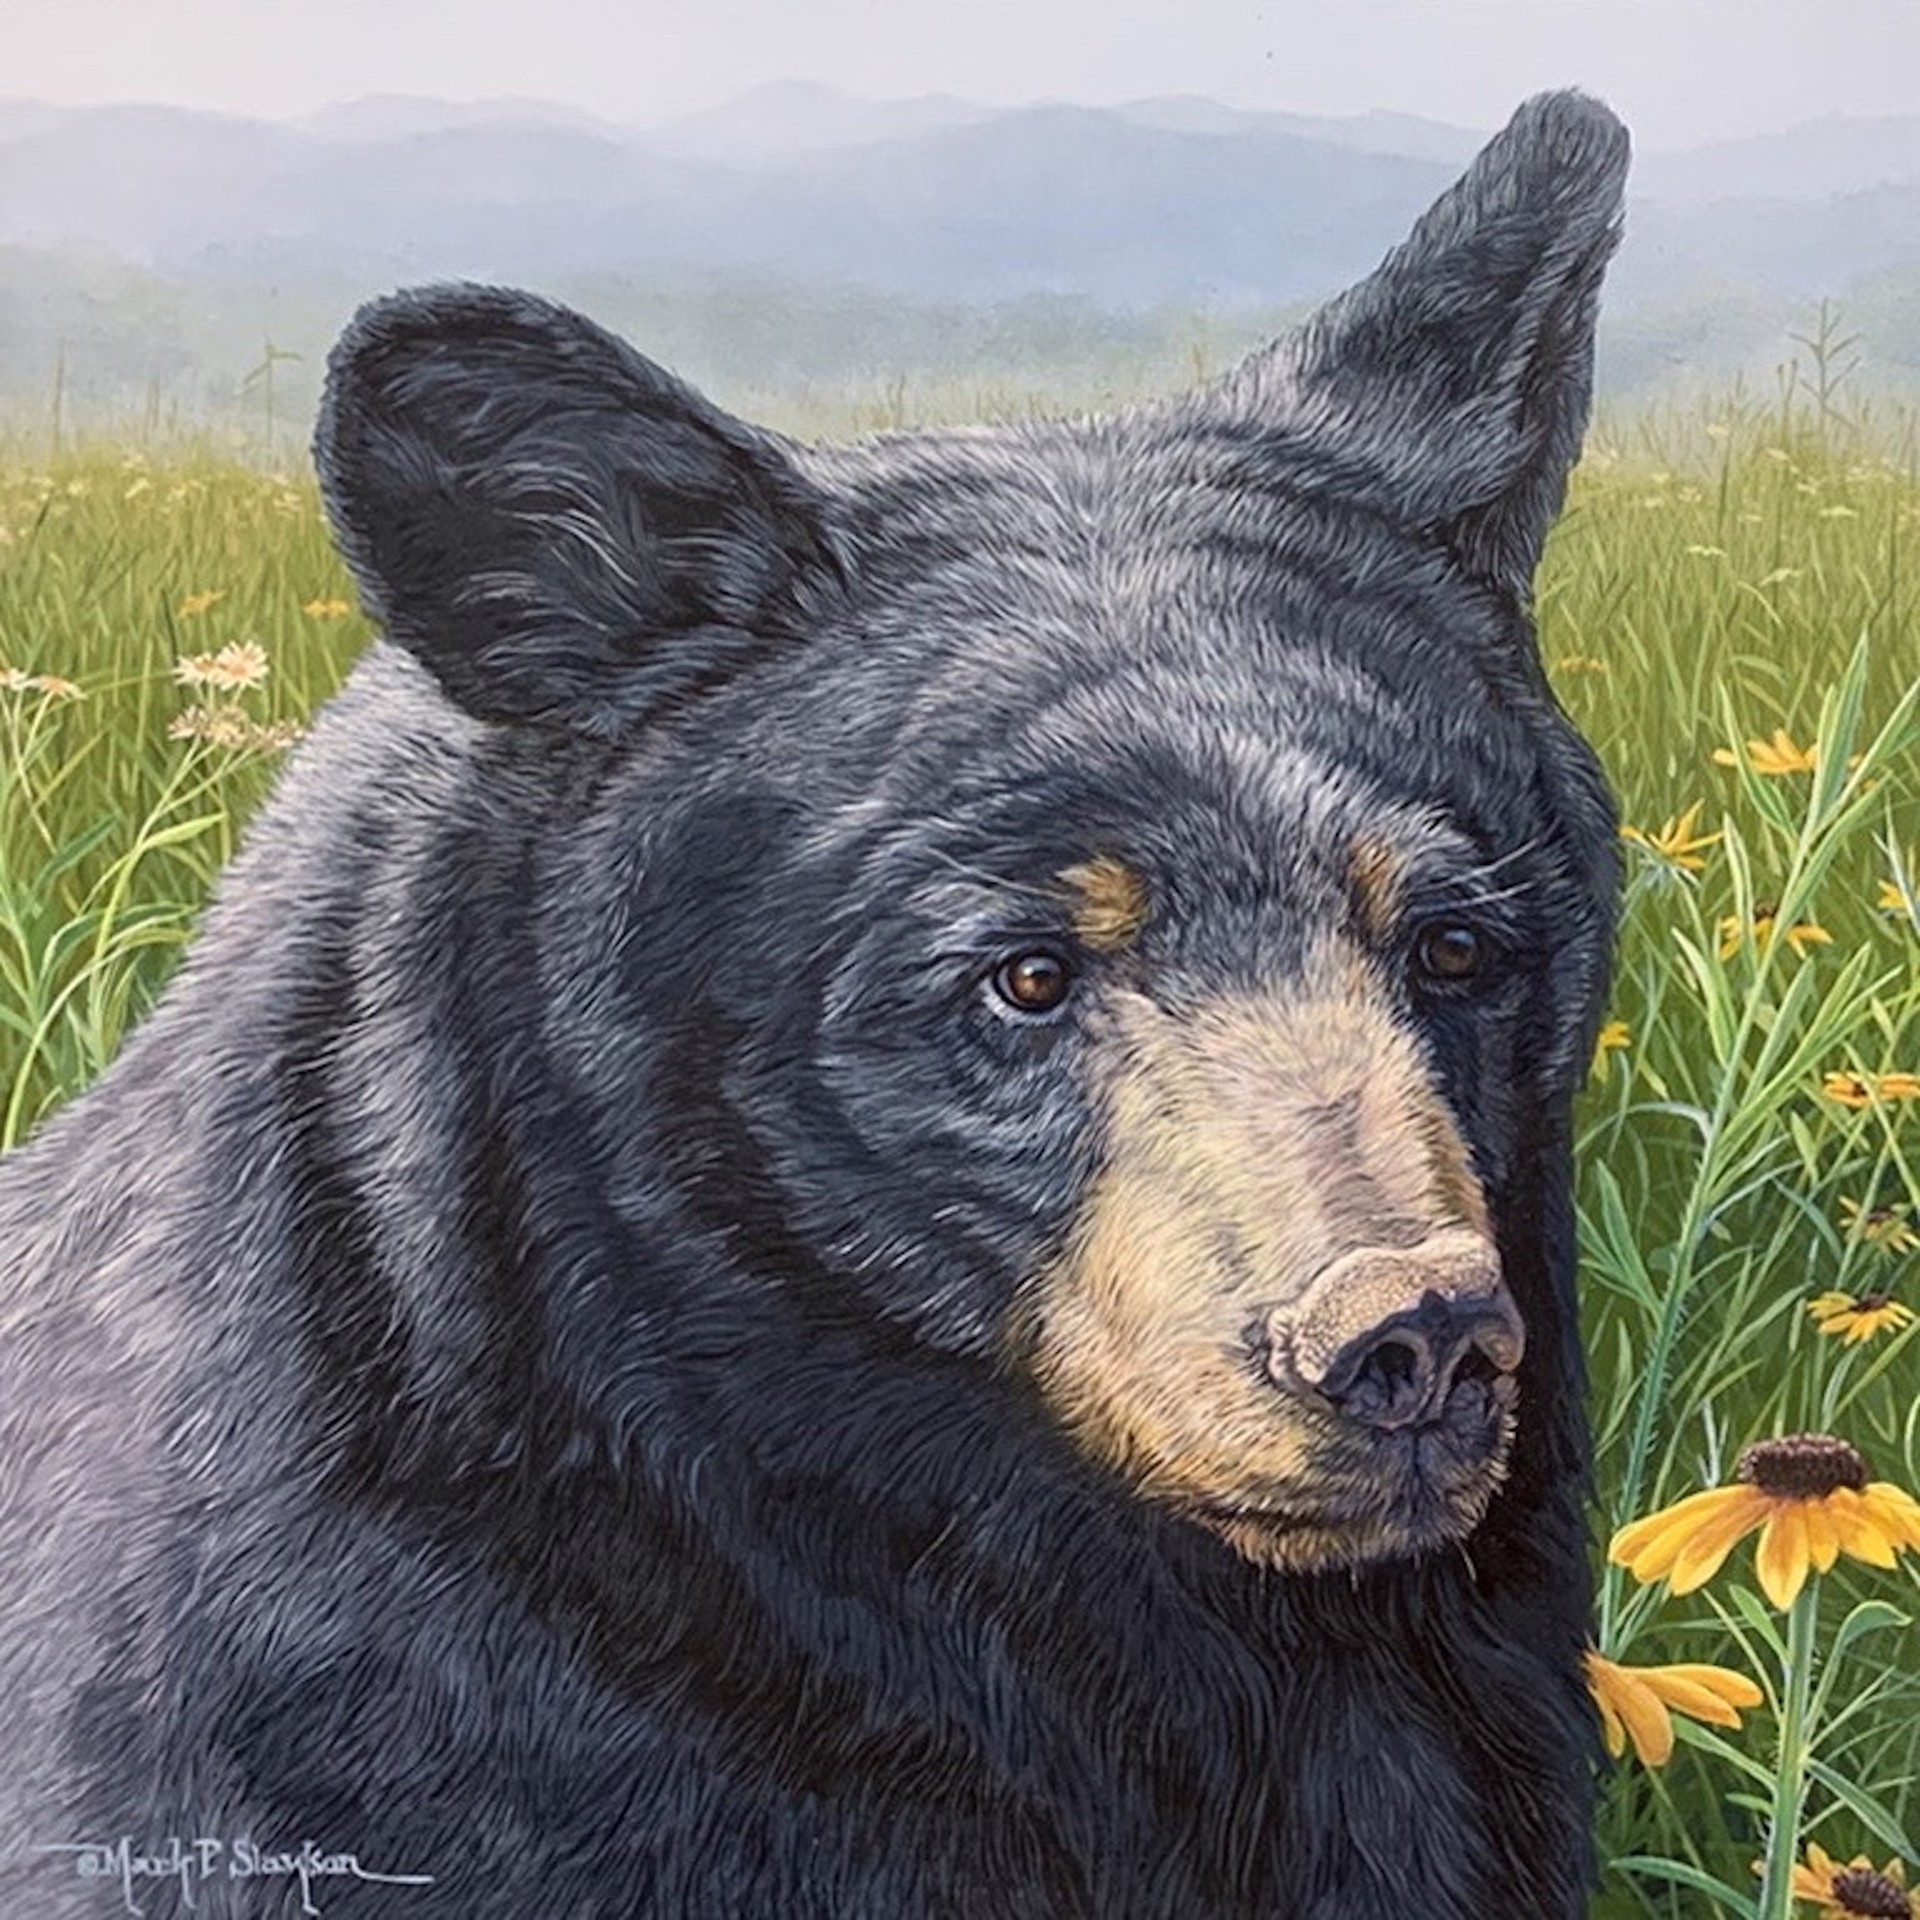 "Devoted to Blossom" - Mother Black Bear Spring Portrait by Mark Slawson